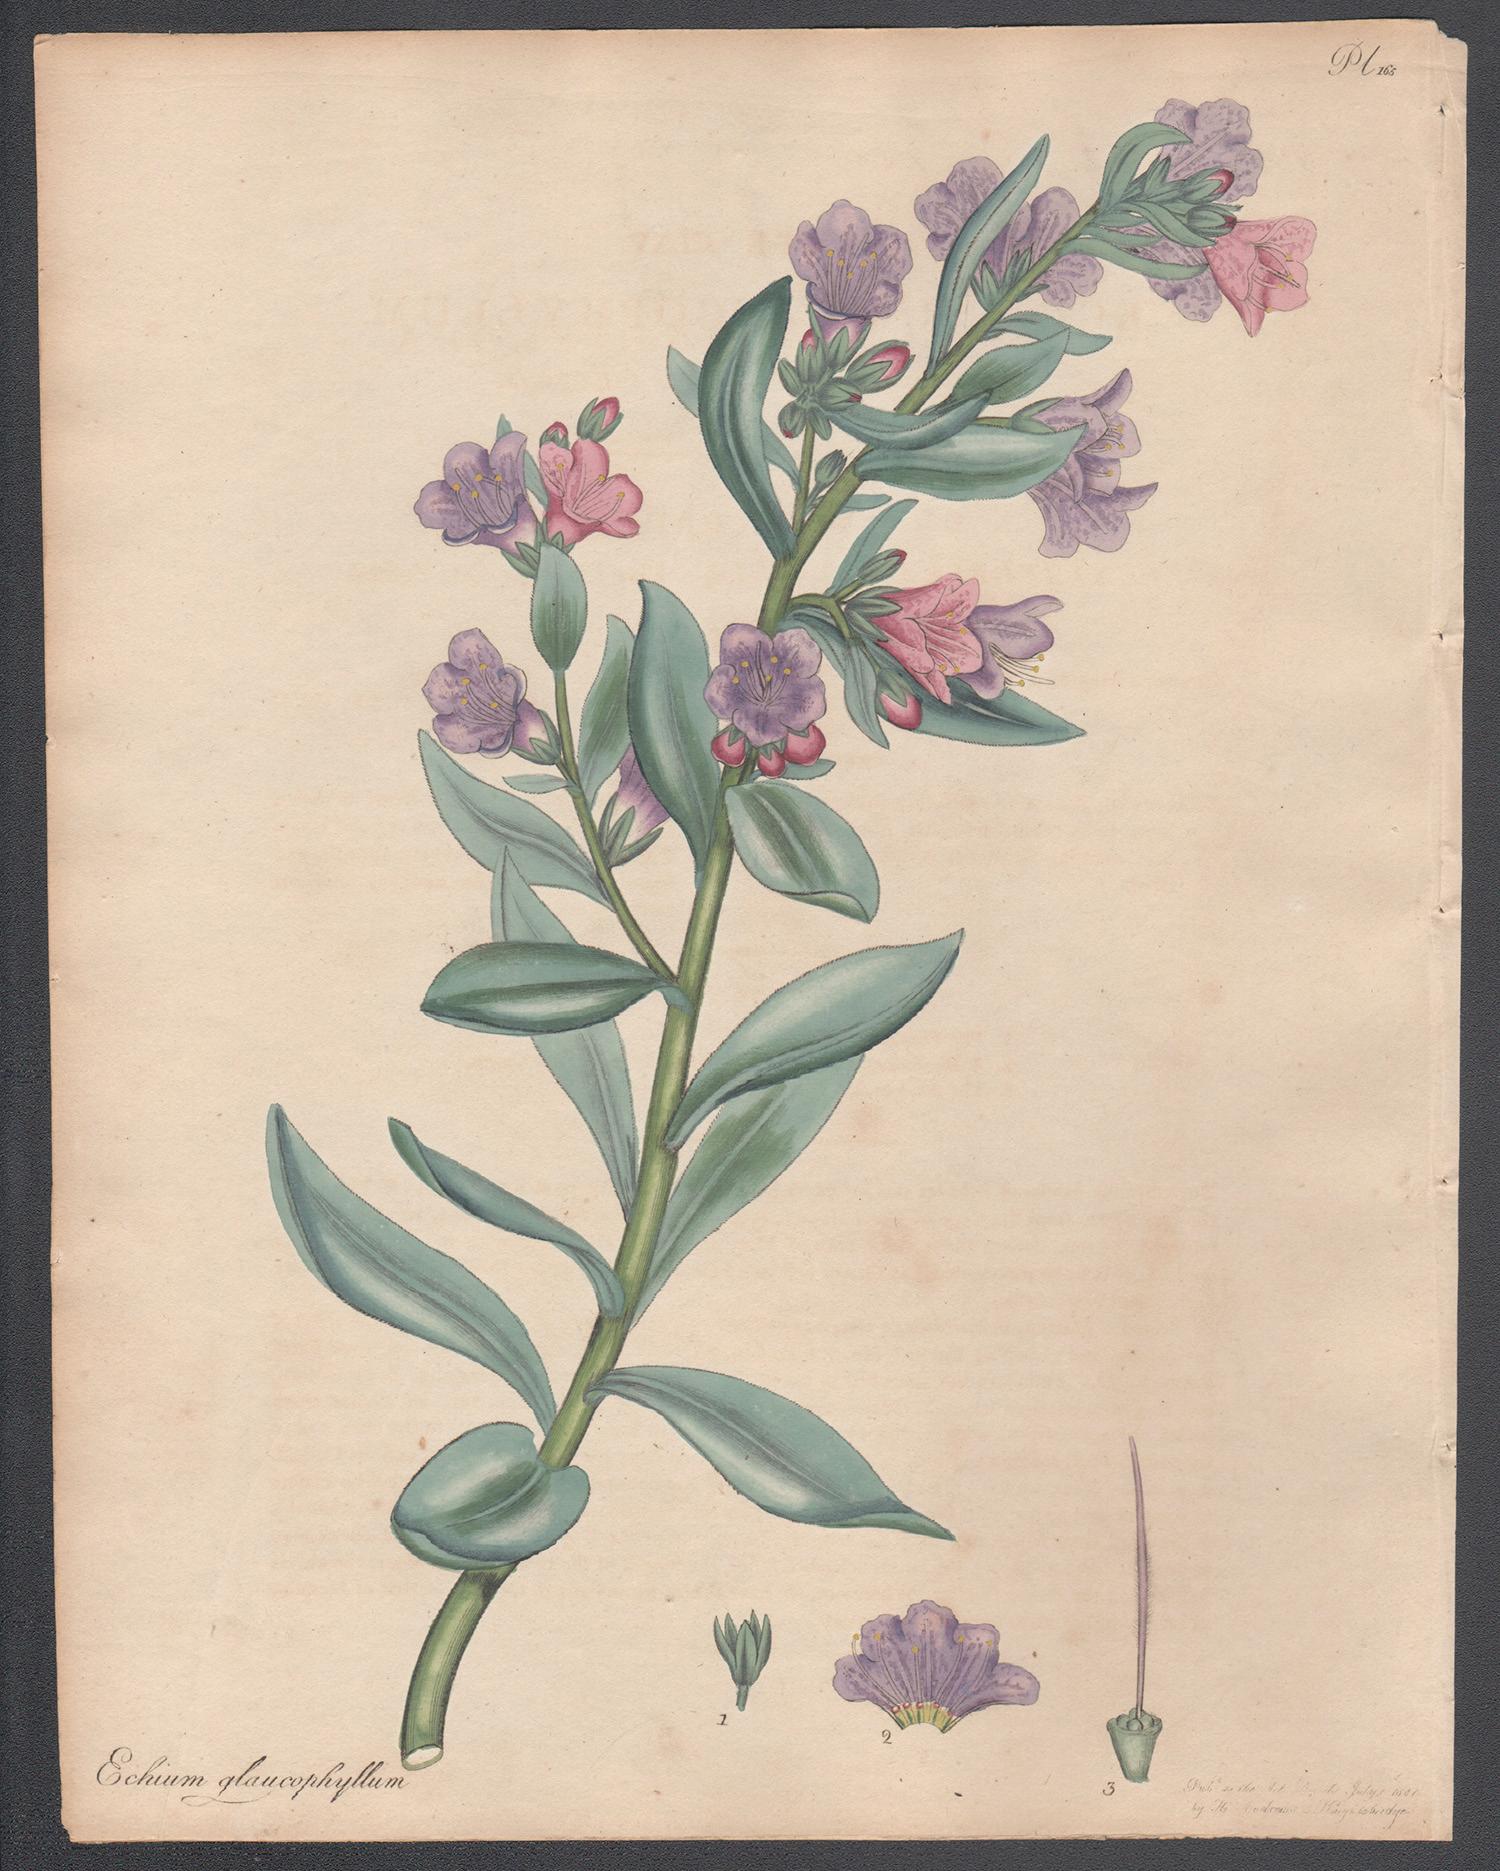 Henry C Andrews Print - Echium Glaucophyllum, Henry Andrews antique botanical flower engraving print